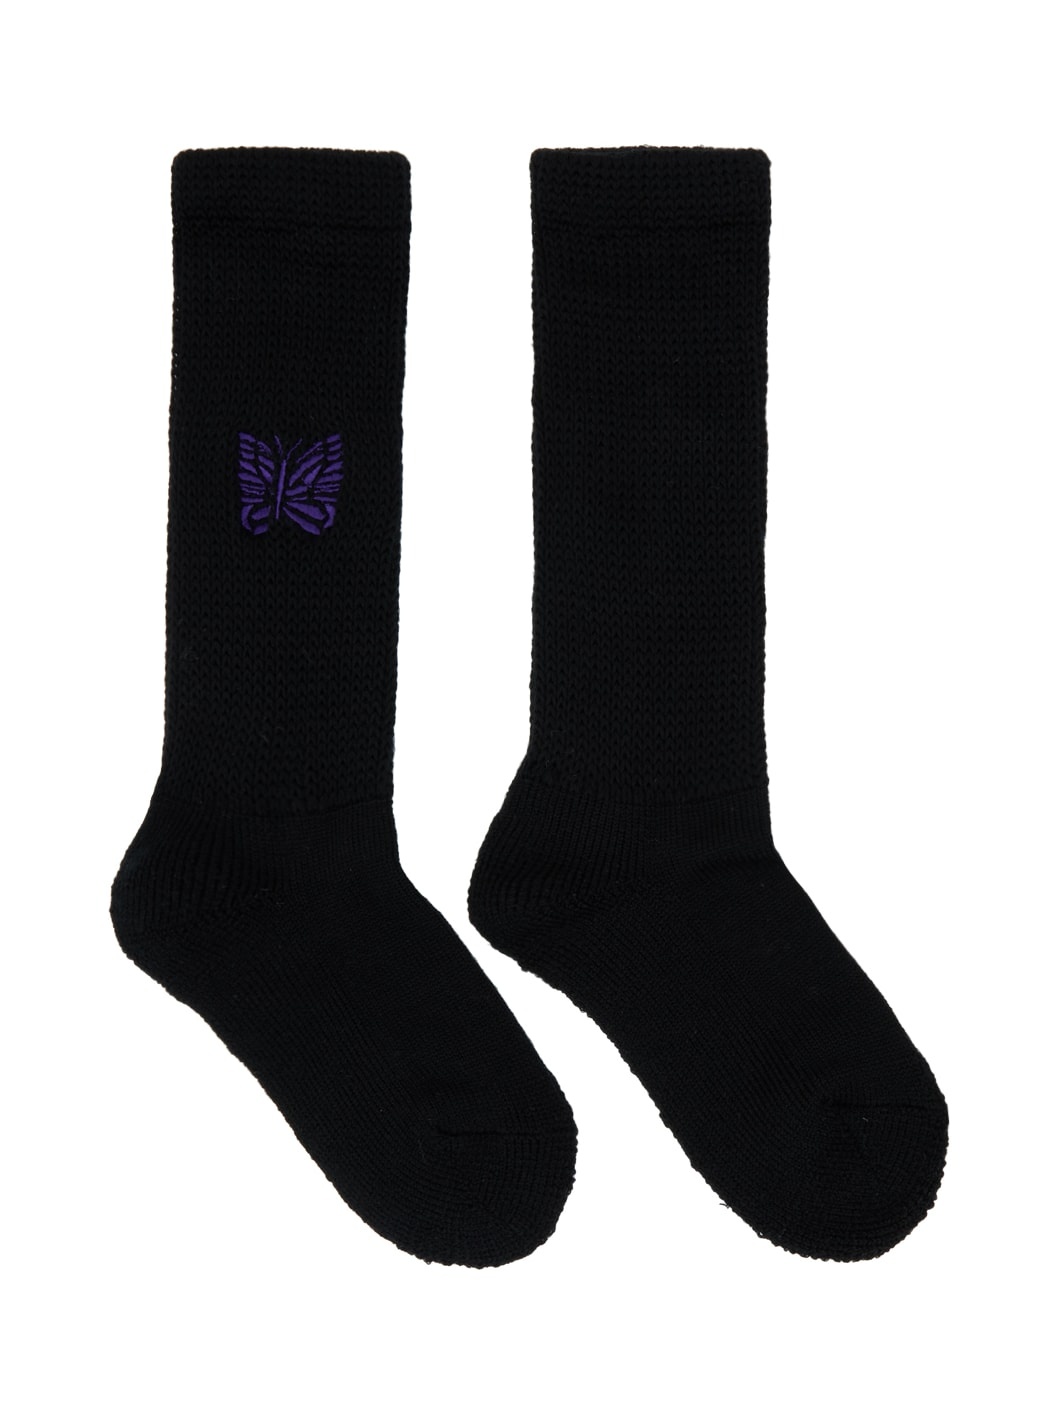 Black Pile Socks - 1